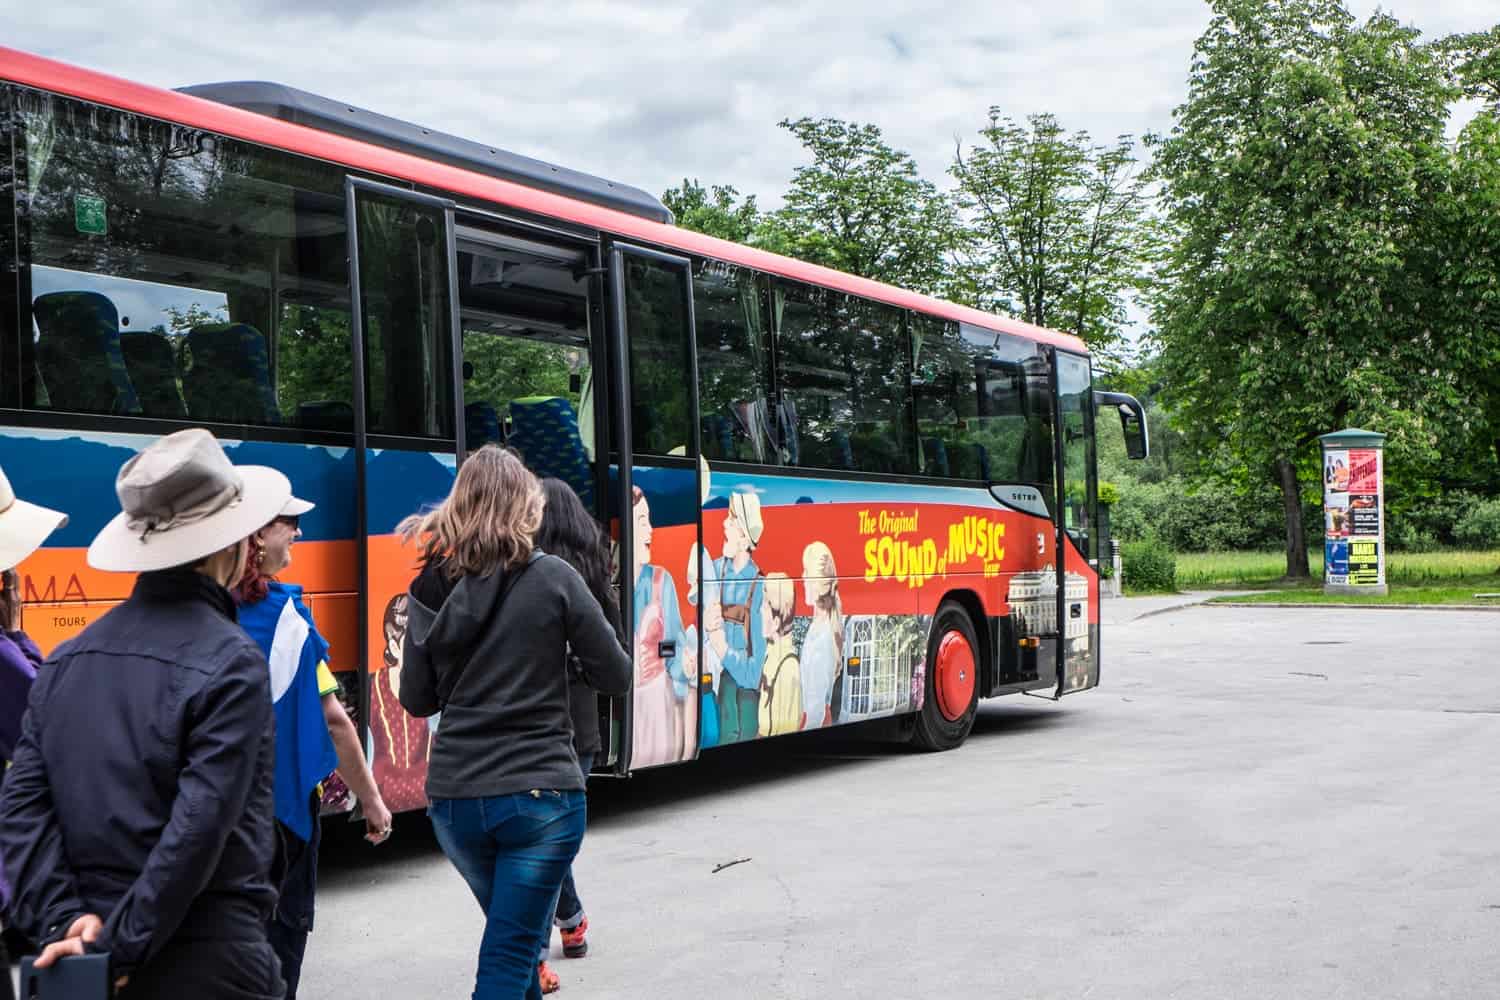 The Sound of Music bus tour in Salzburg, Austria